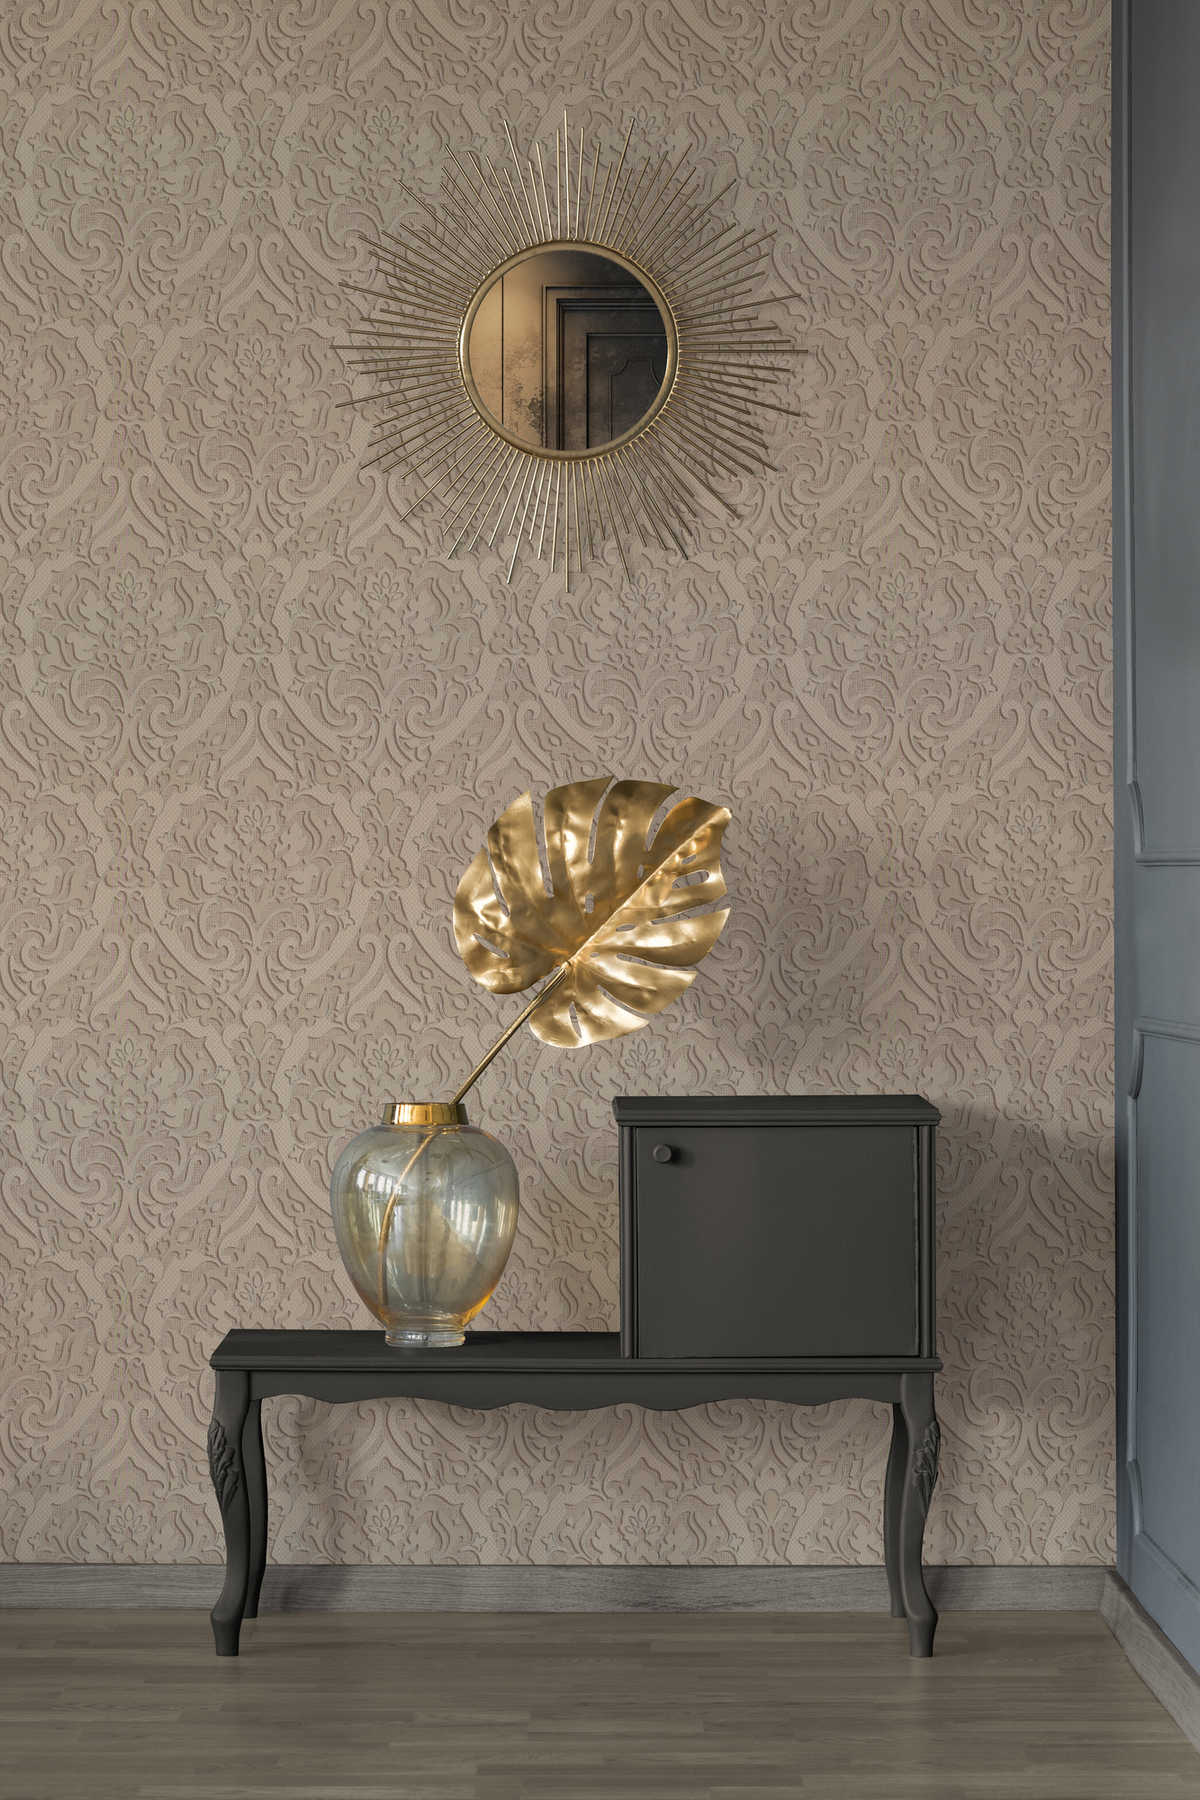             3D Ornament wallpaper, double width 106cm - Brown, Metallic
        